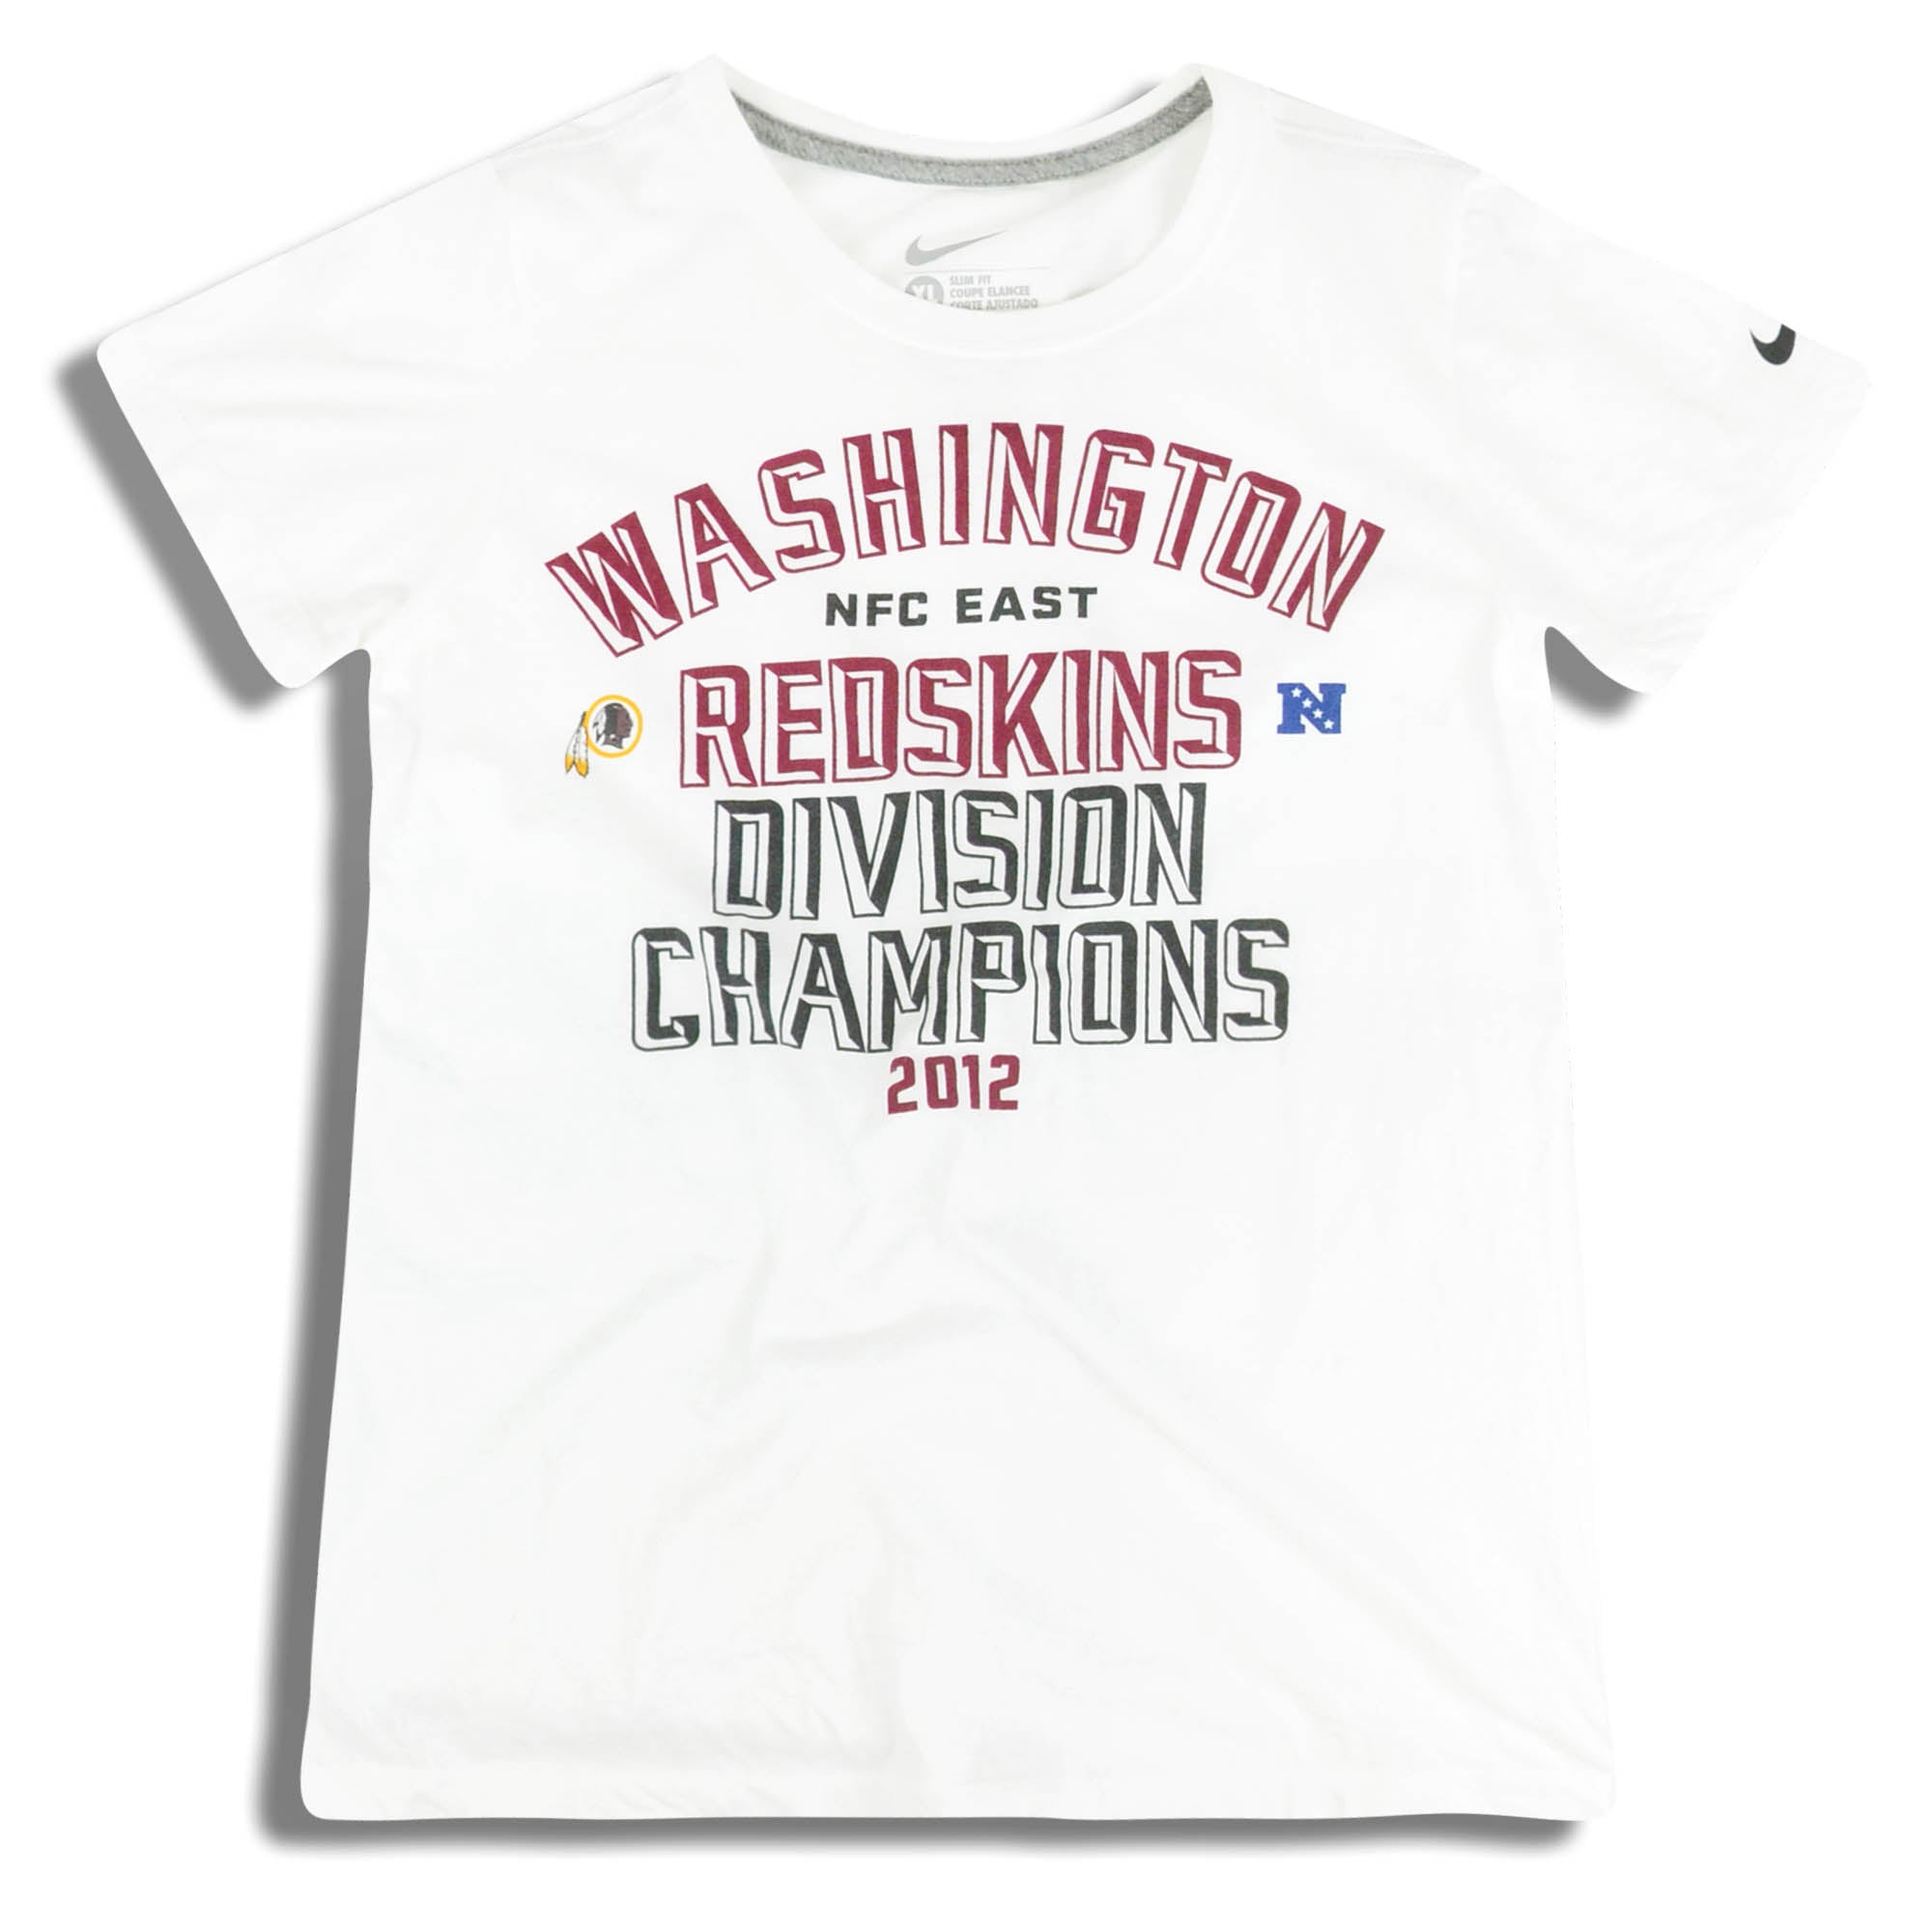 2012 WASHINGTON REDSKINS DIVISION CHAMPIONS NIKE GRAPHIC TEE WOMENS (XL)